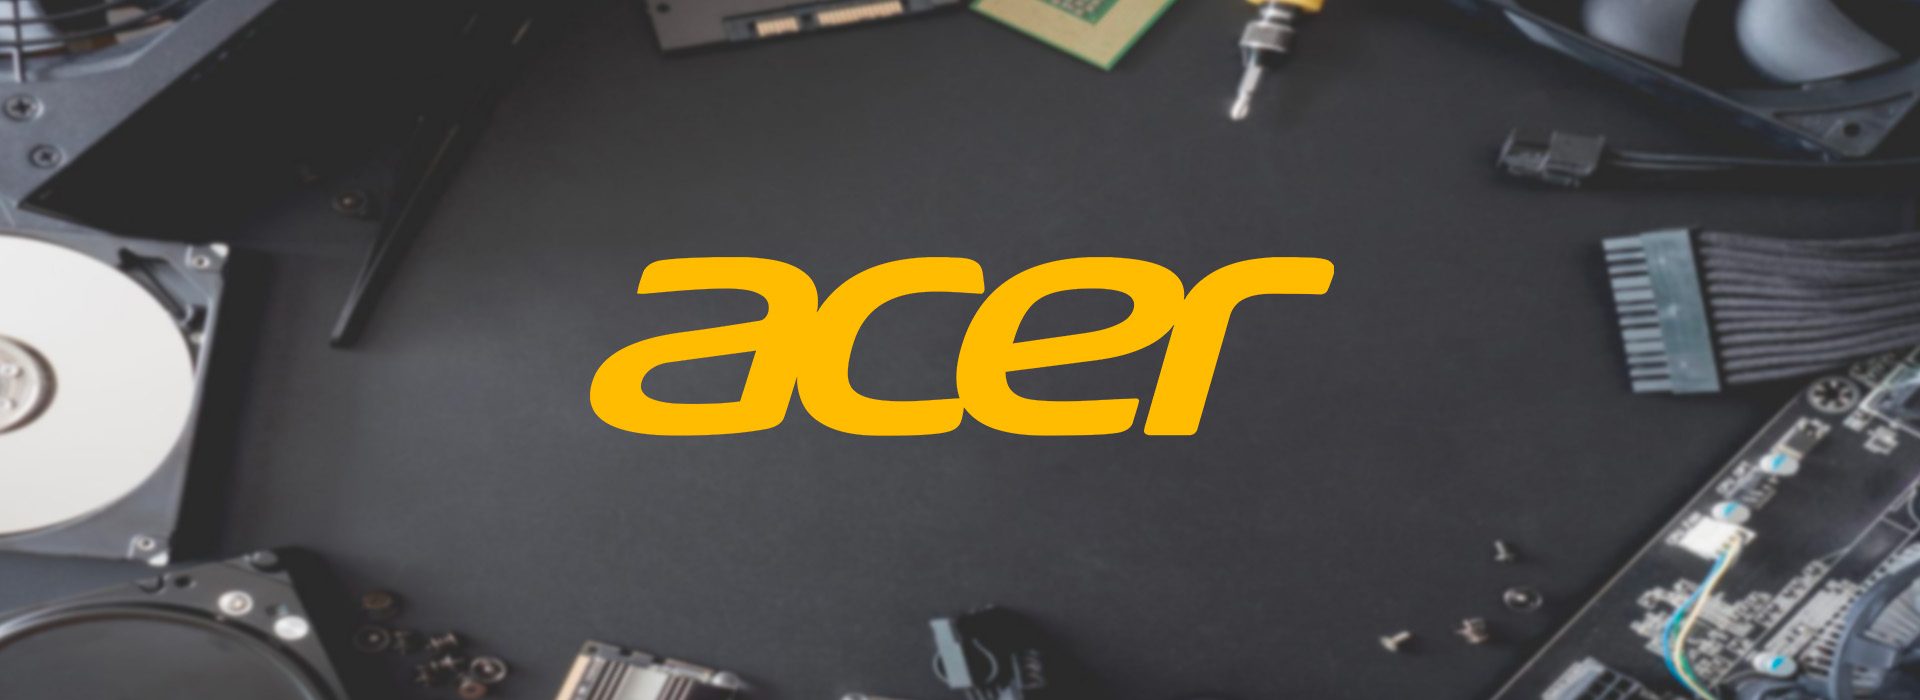 Acer-header-2.jpg